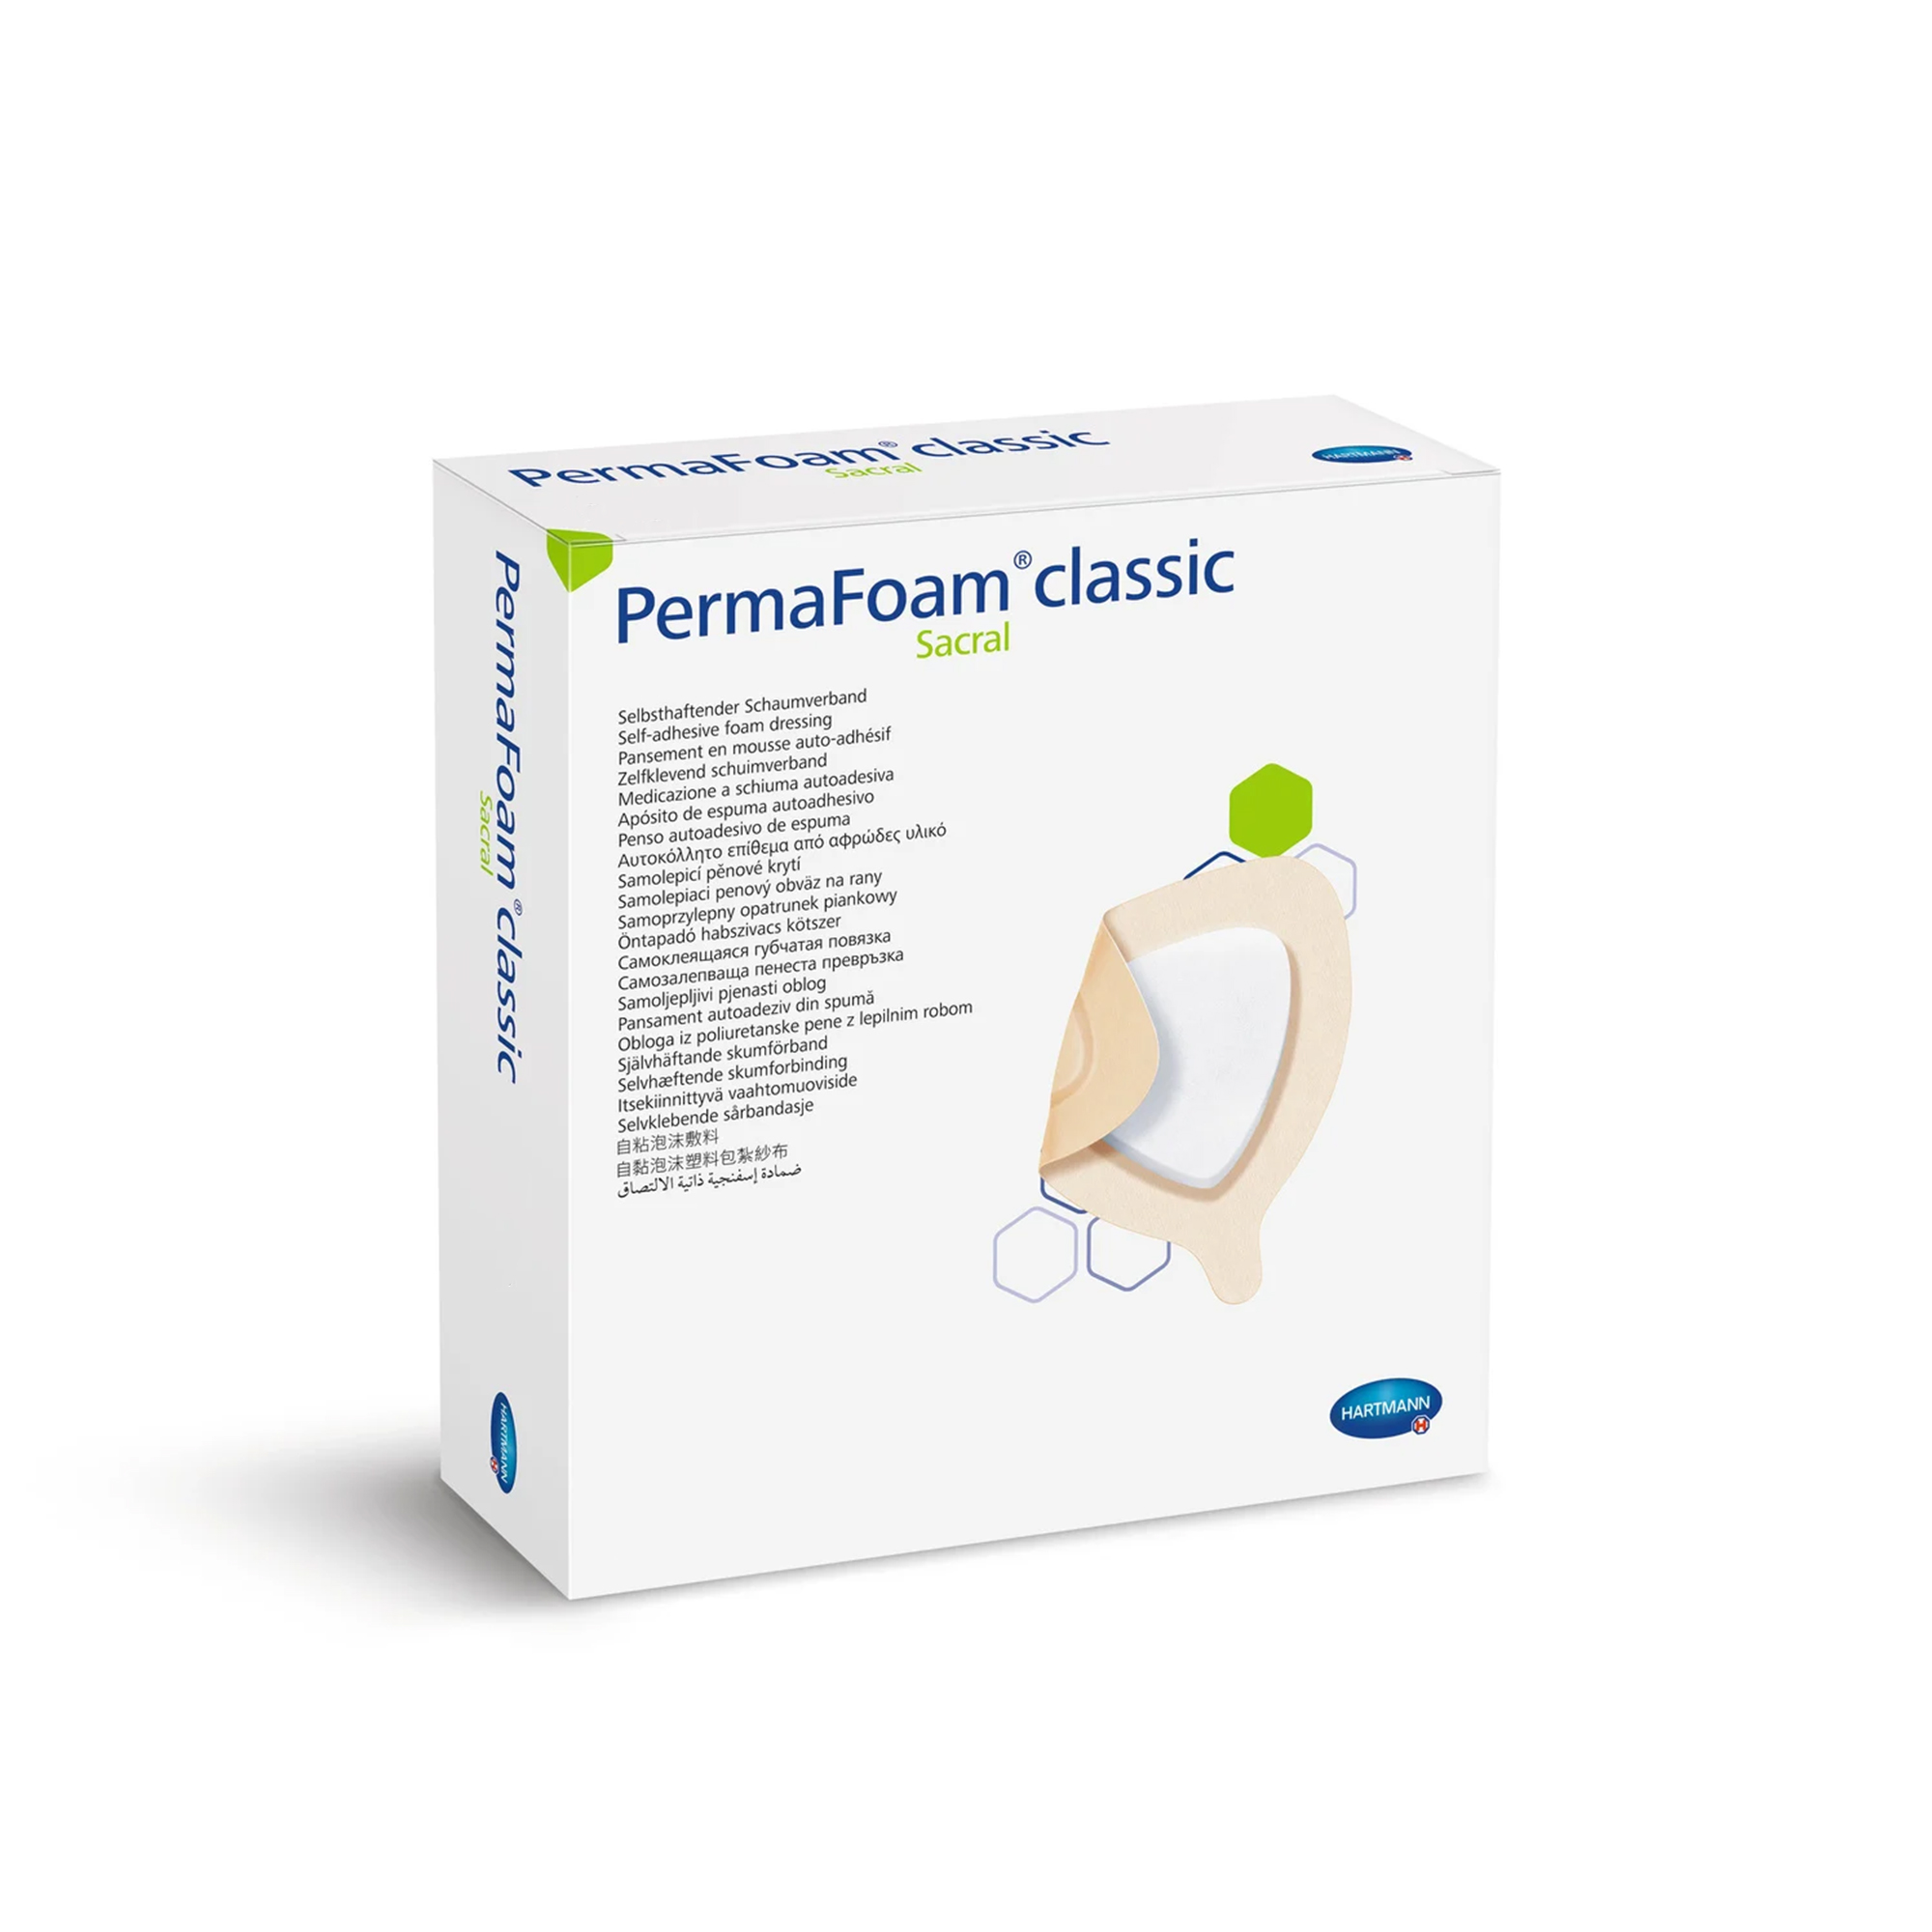 Hartmann PermaFoam® Classic Sacral 18 x 18 cm, 10 pieces